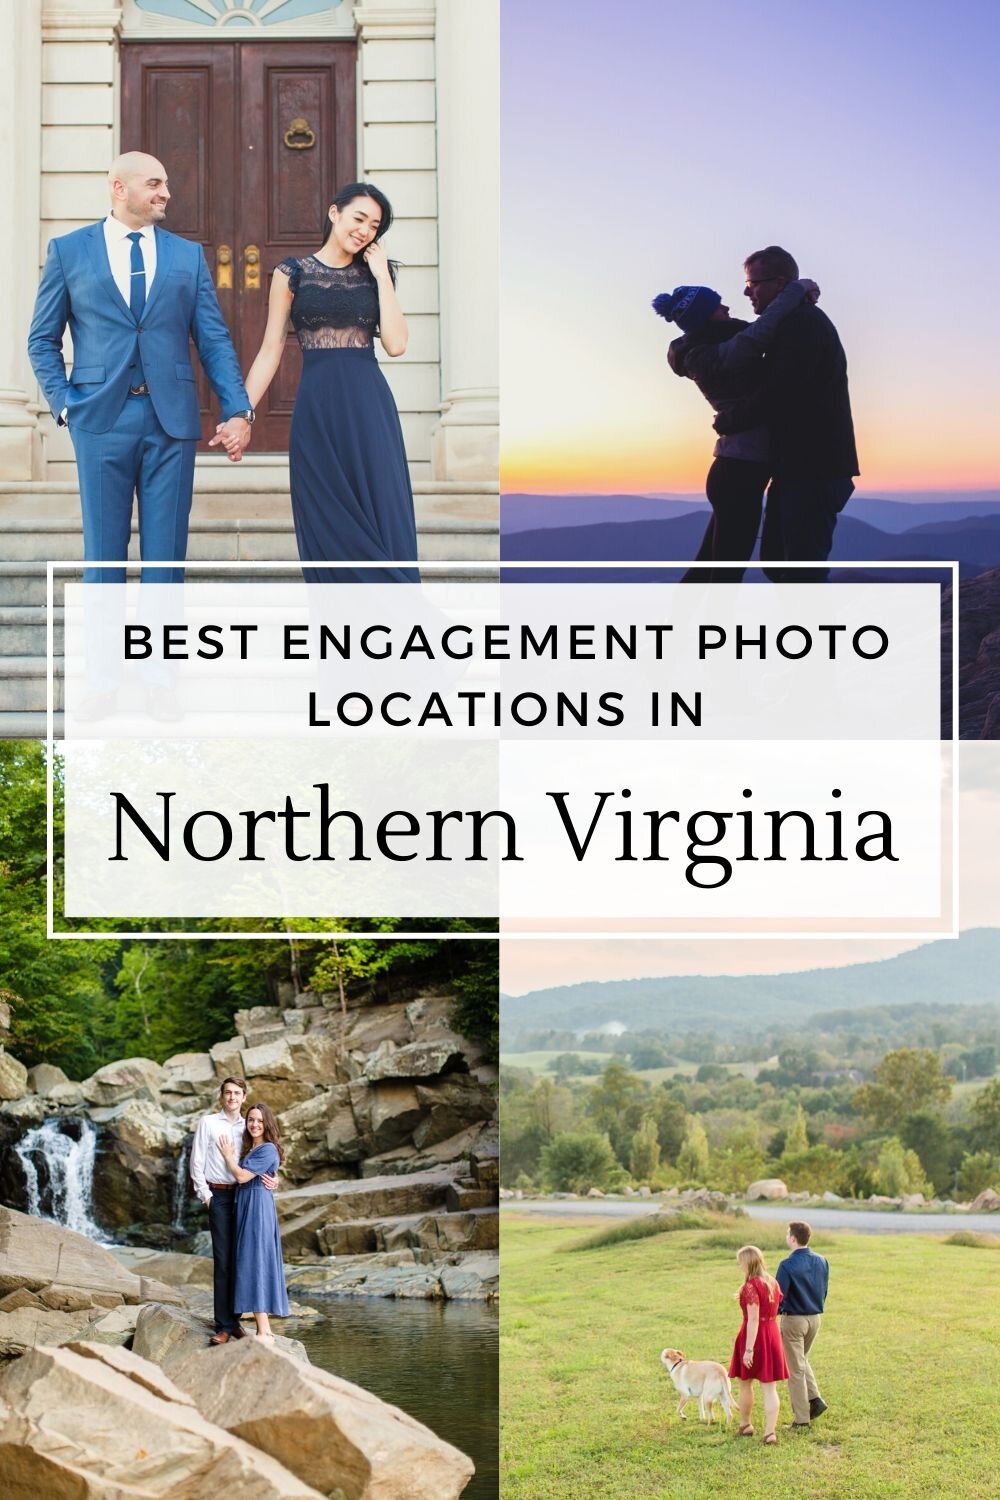 4 images best - nova engagements.jpg